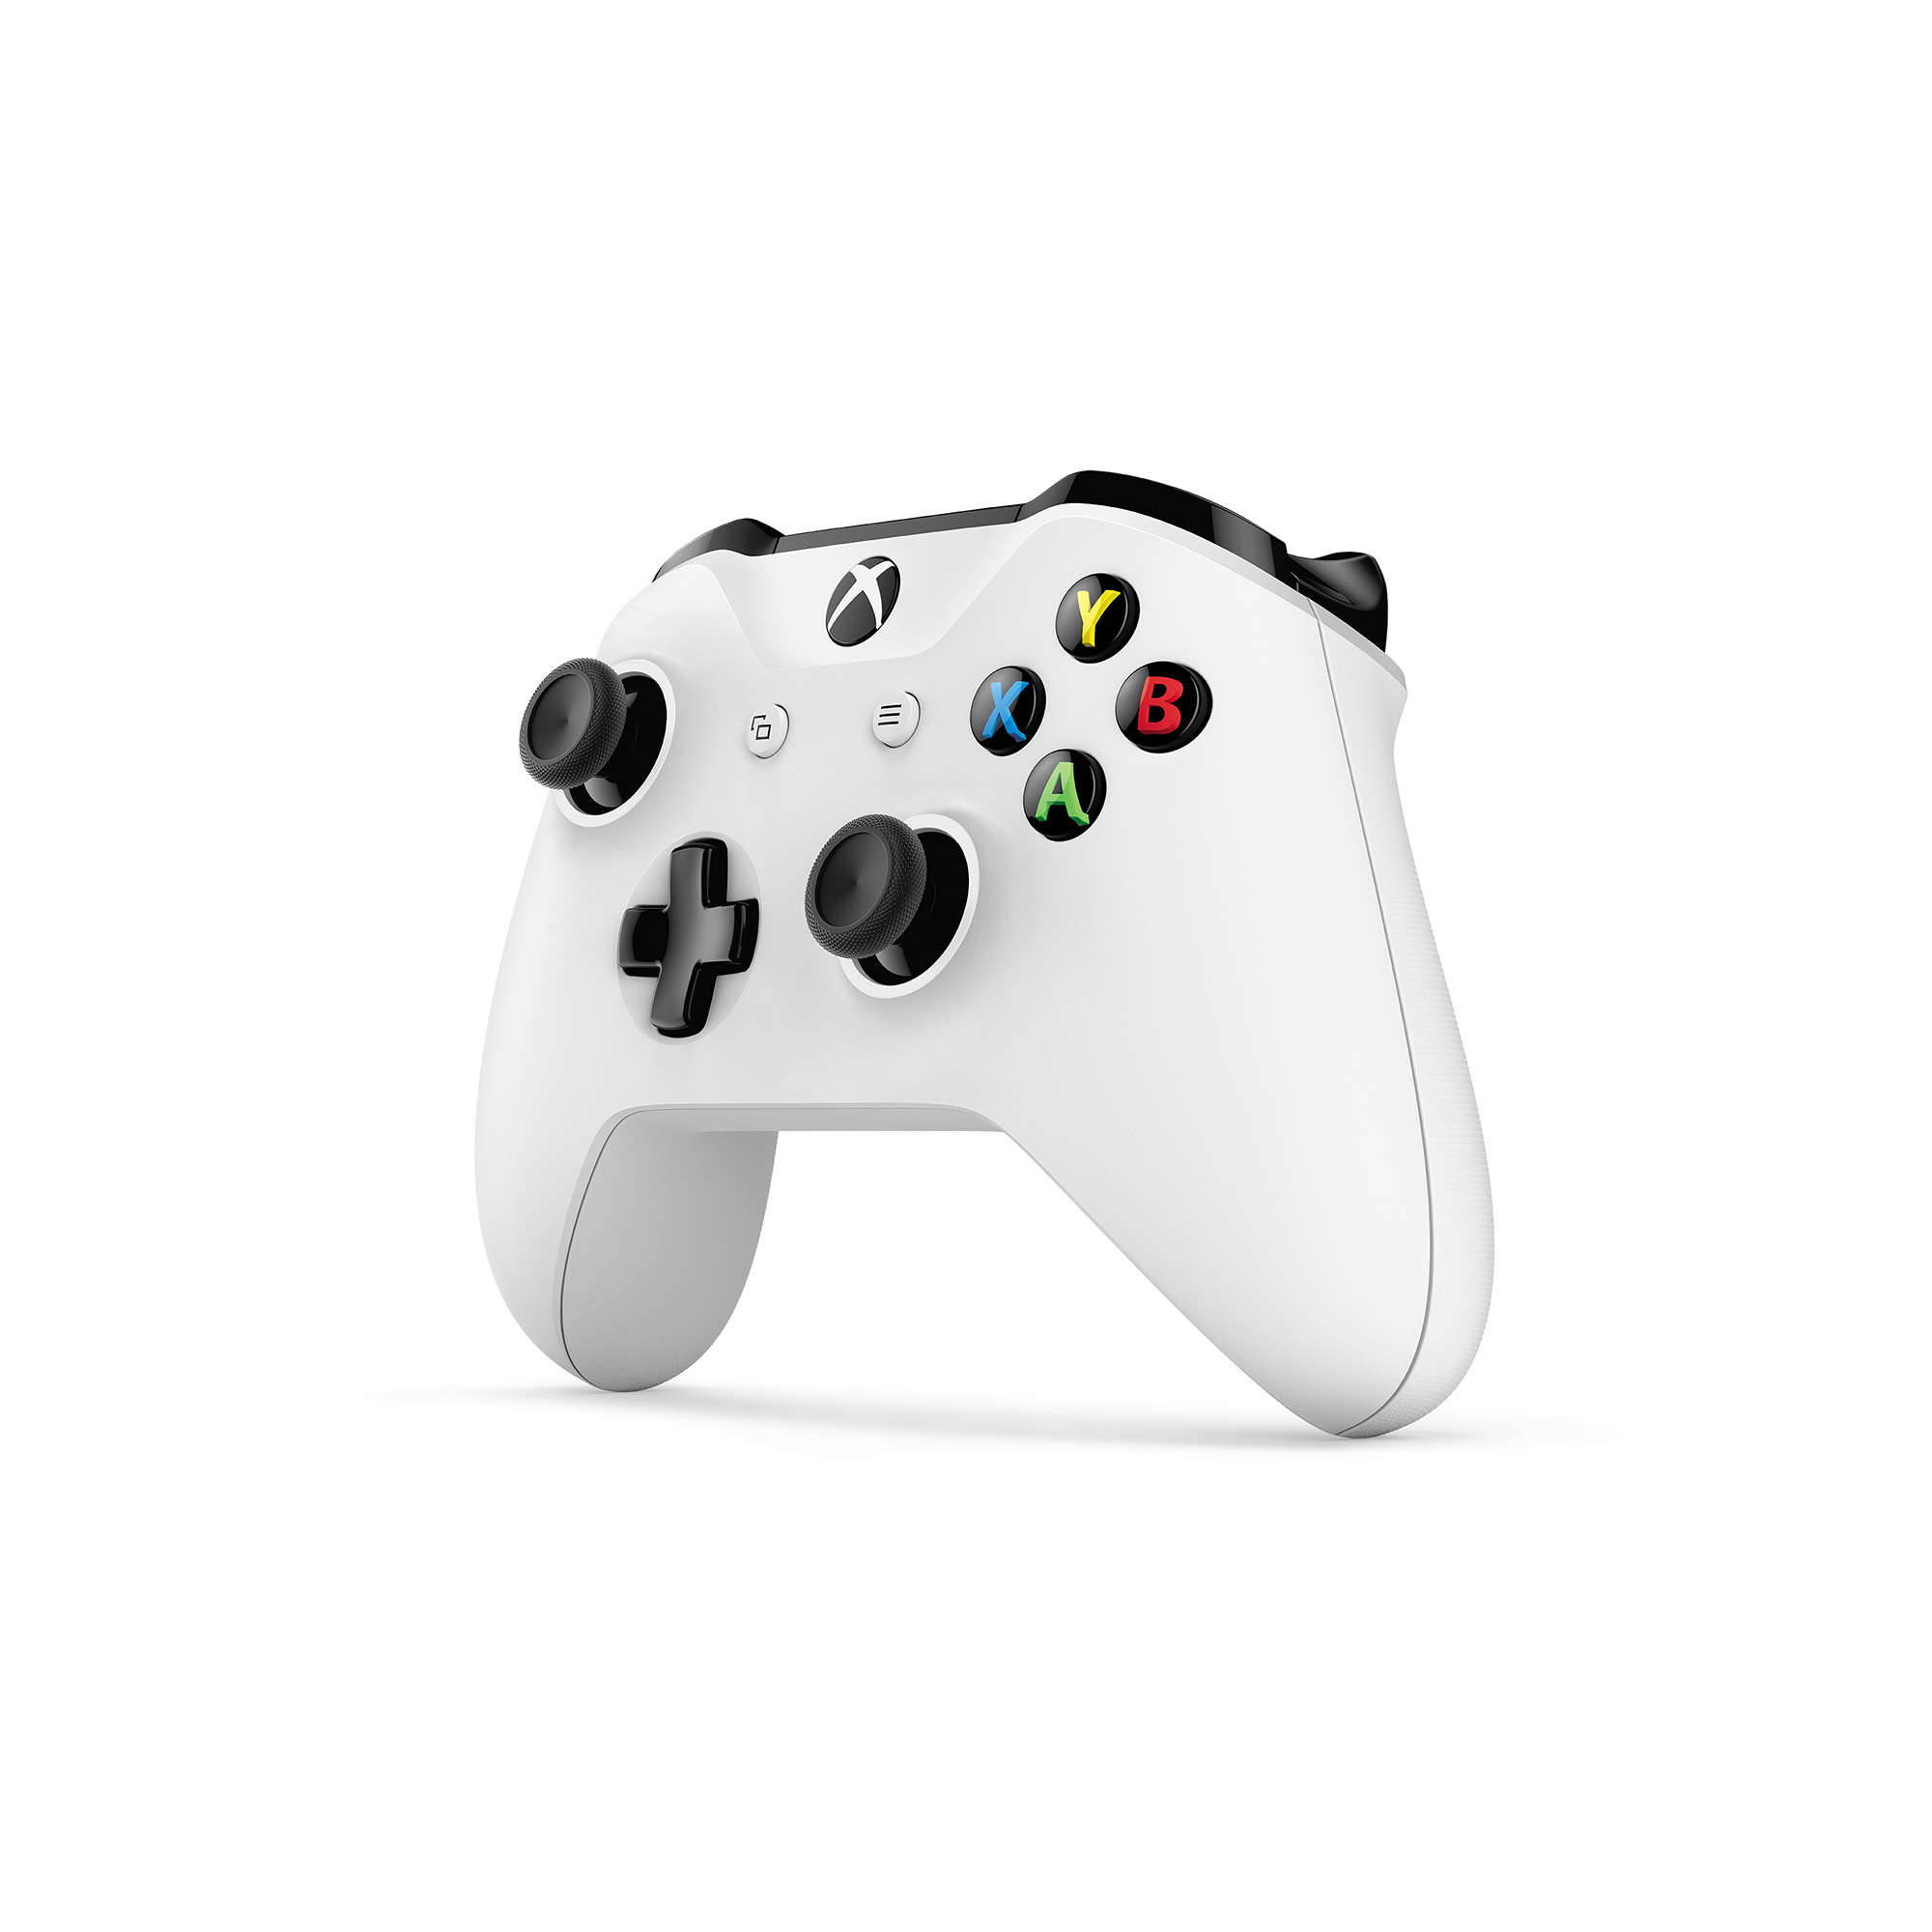 Microsoft Xbox One S 1TB NBA 2K19 Bundle, White, 234-00575 - image 3 of 10